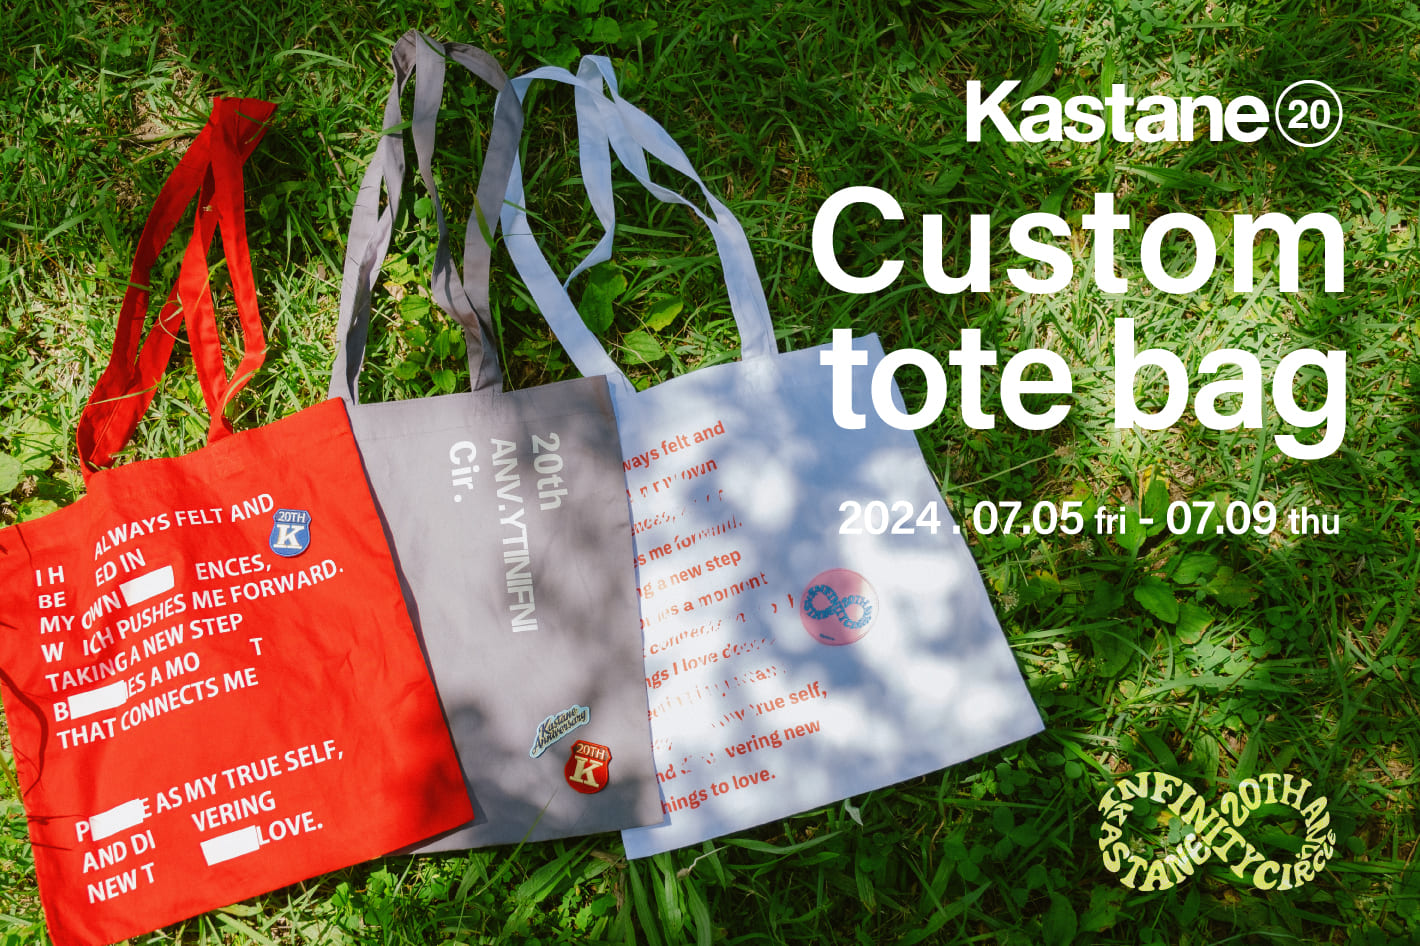 Kastane 【PAL CLOSET 5日間限定】Kastane 20♾️ custom tote bag 7/5(fri)~7/9(tue)